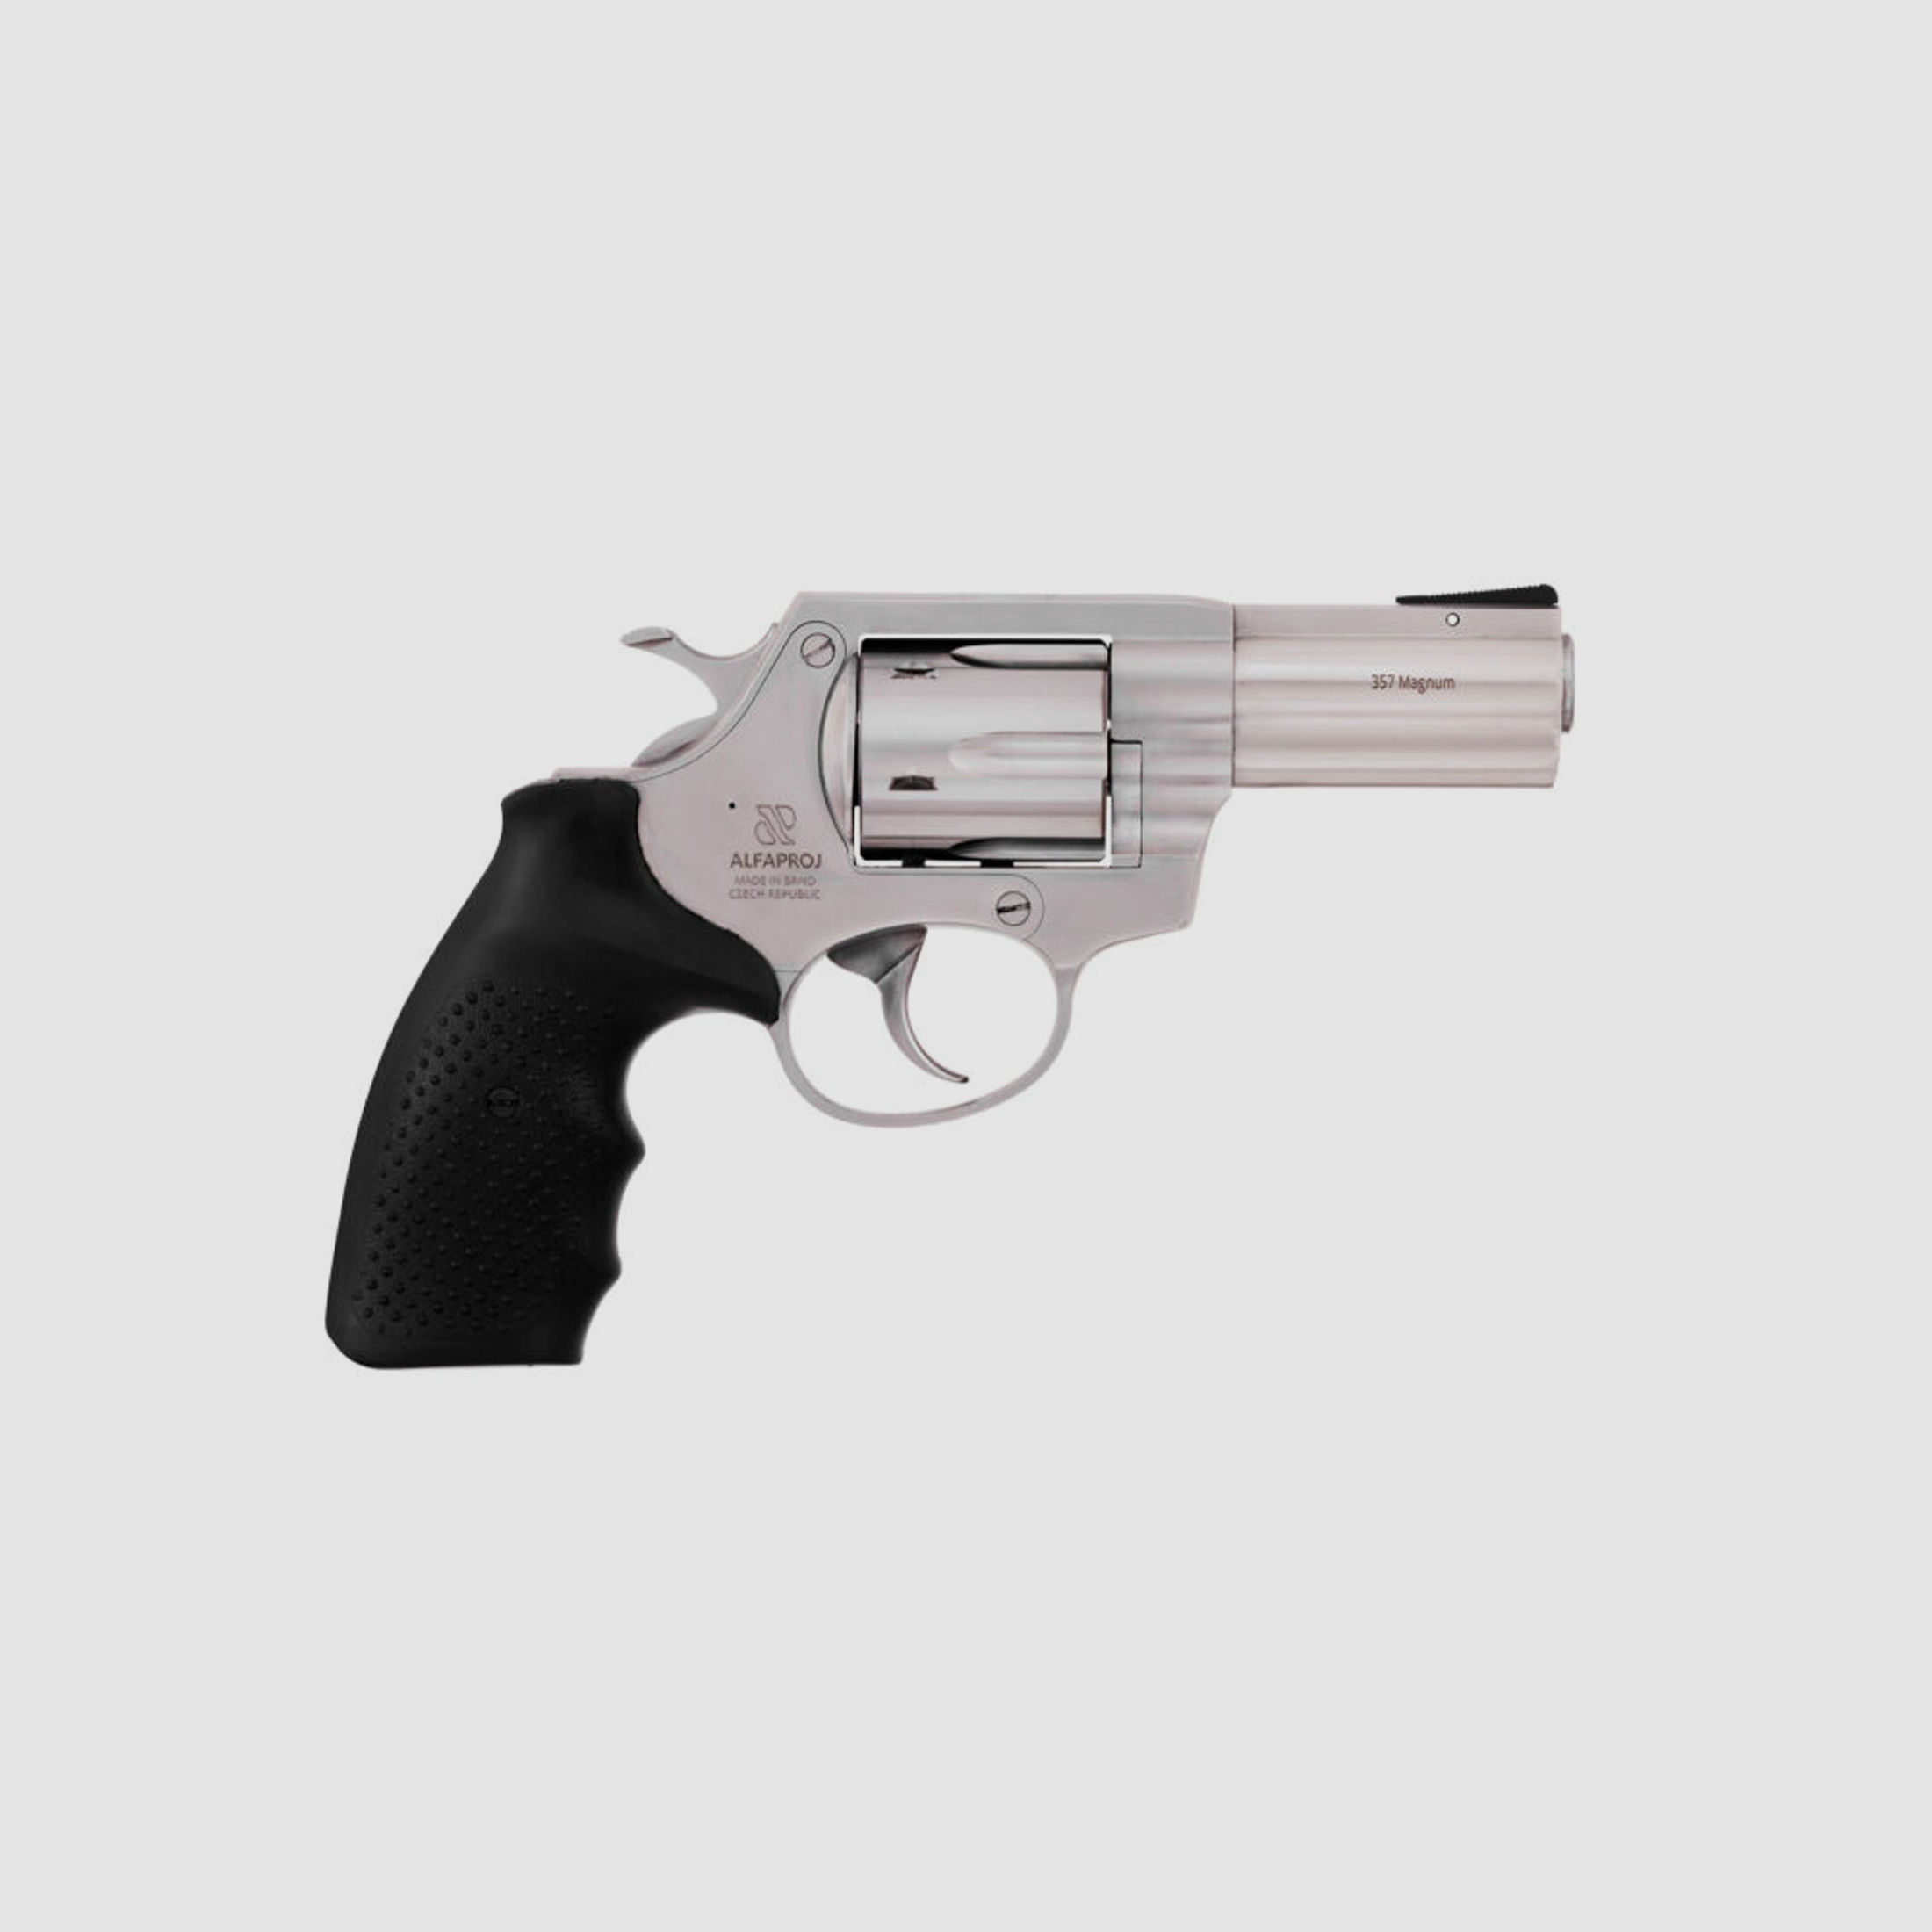 Alfa Proj	 3530 stainless 3" (3 Zoll) .357 Mag. Revolver